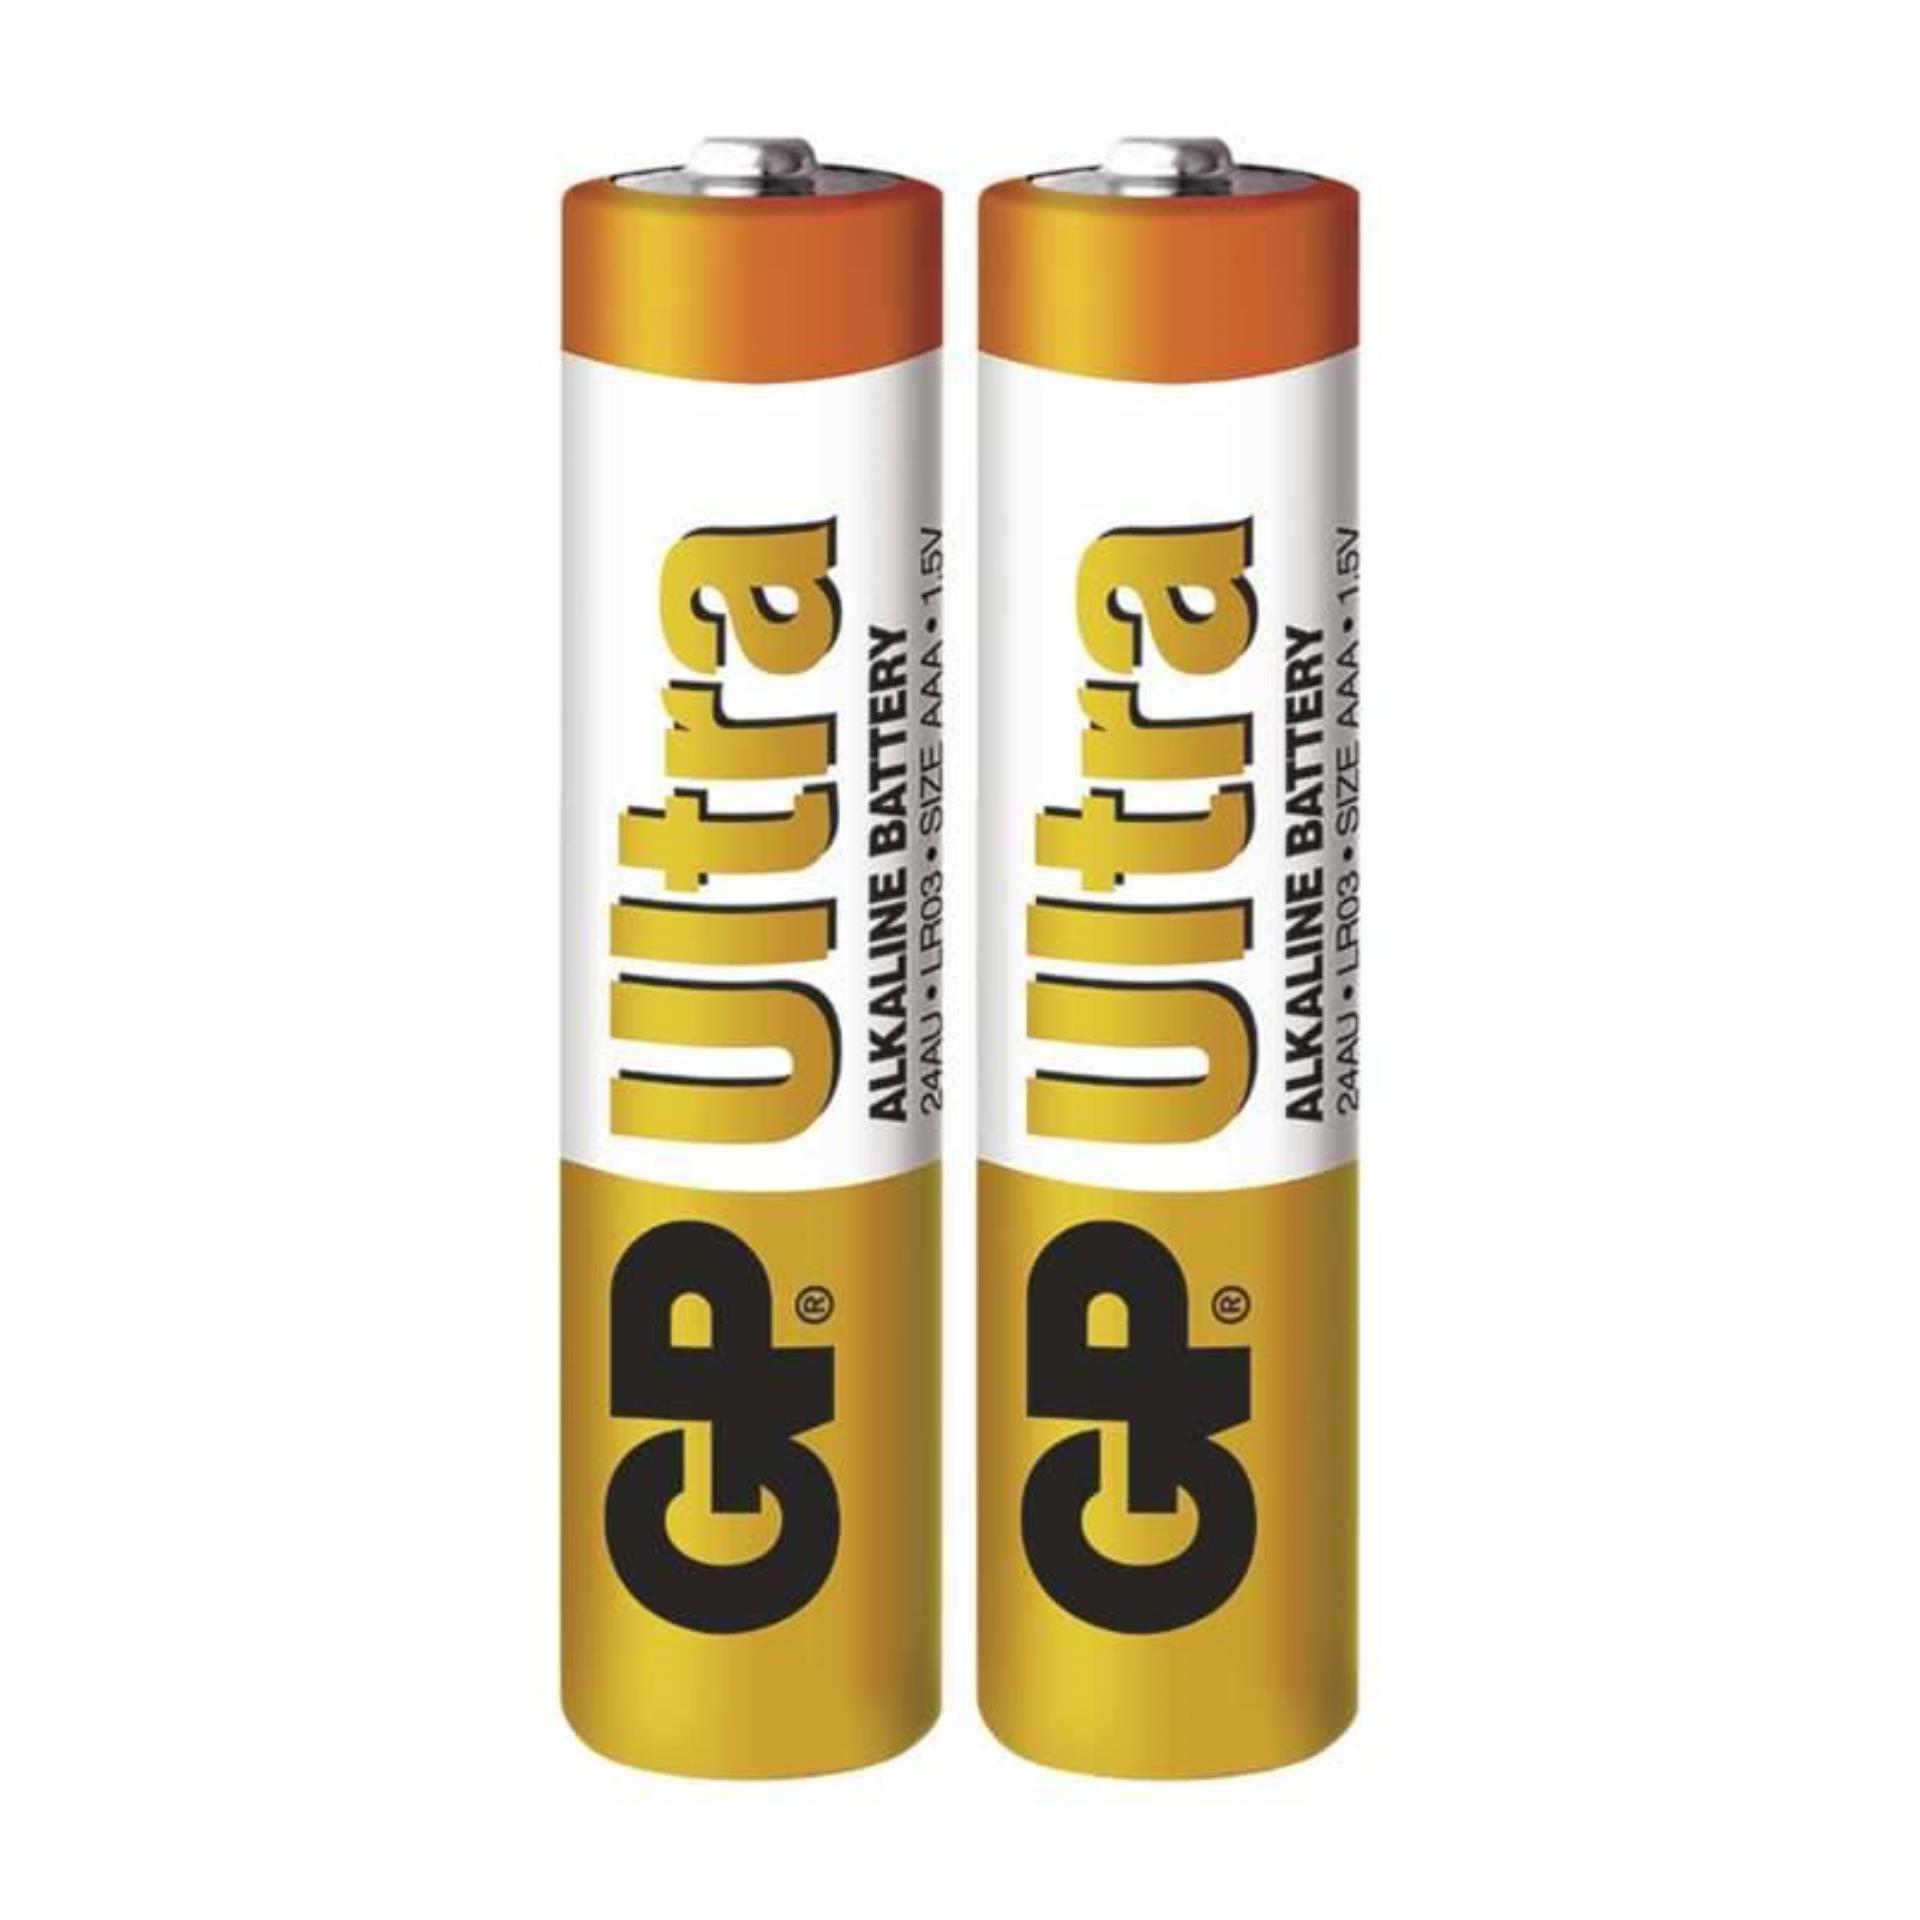 Baterie GP Ultra Alkaline 1,5 V R03, typ AAA, 2 ks